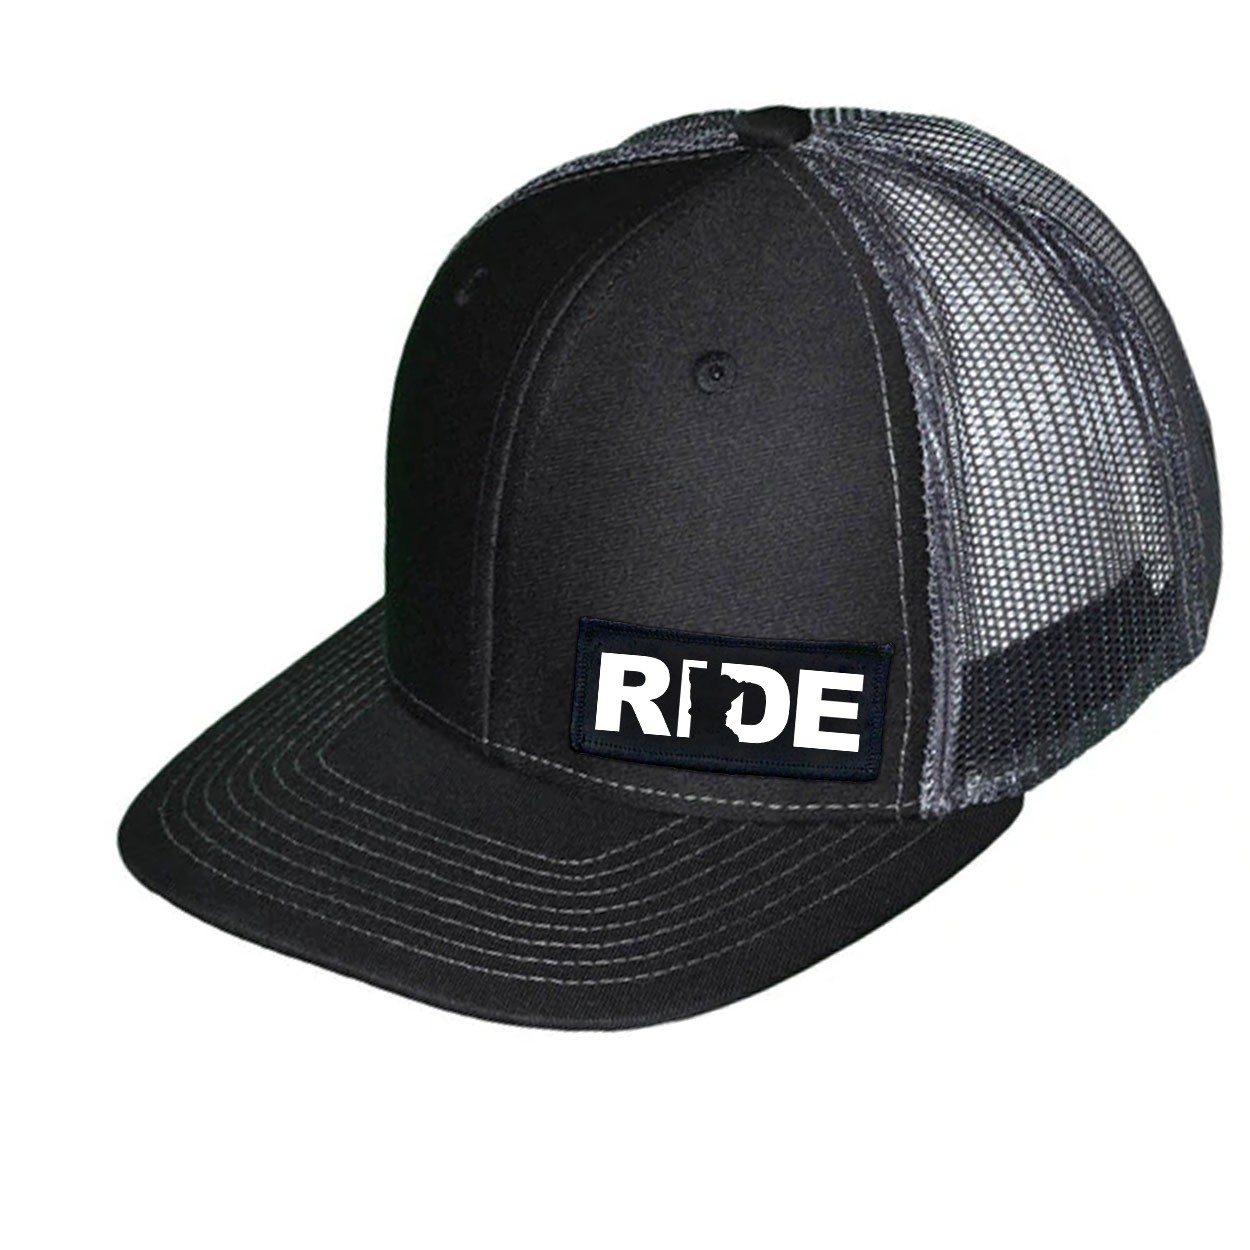 Ride Minnesota Night Out Woven Patch Snapback Trucker Hat Black/Dark Gray (White Logo)